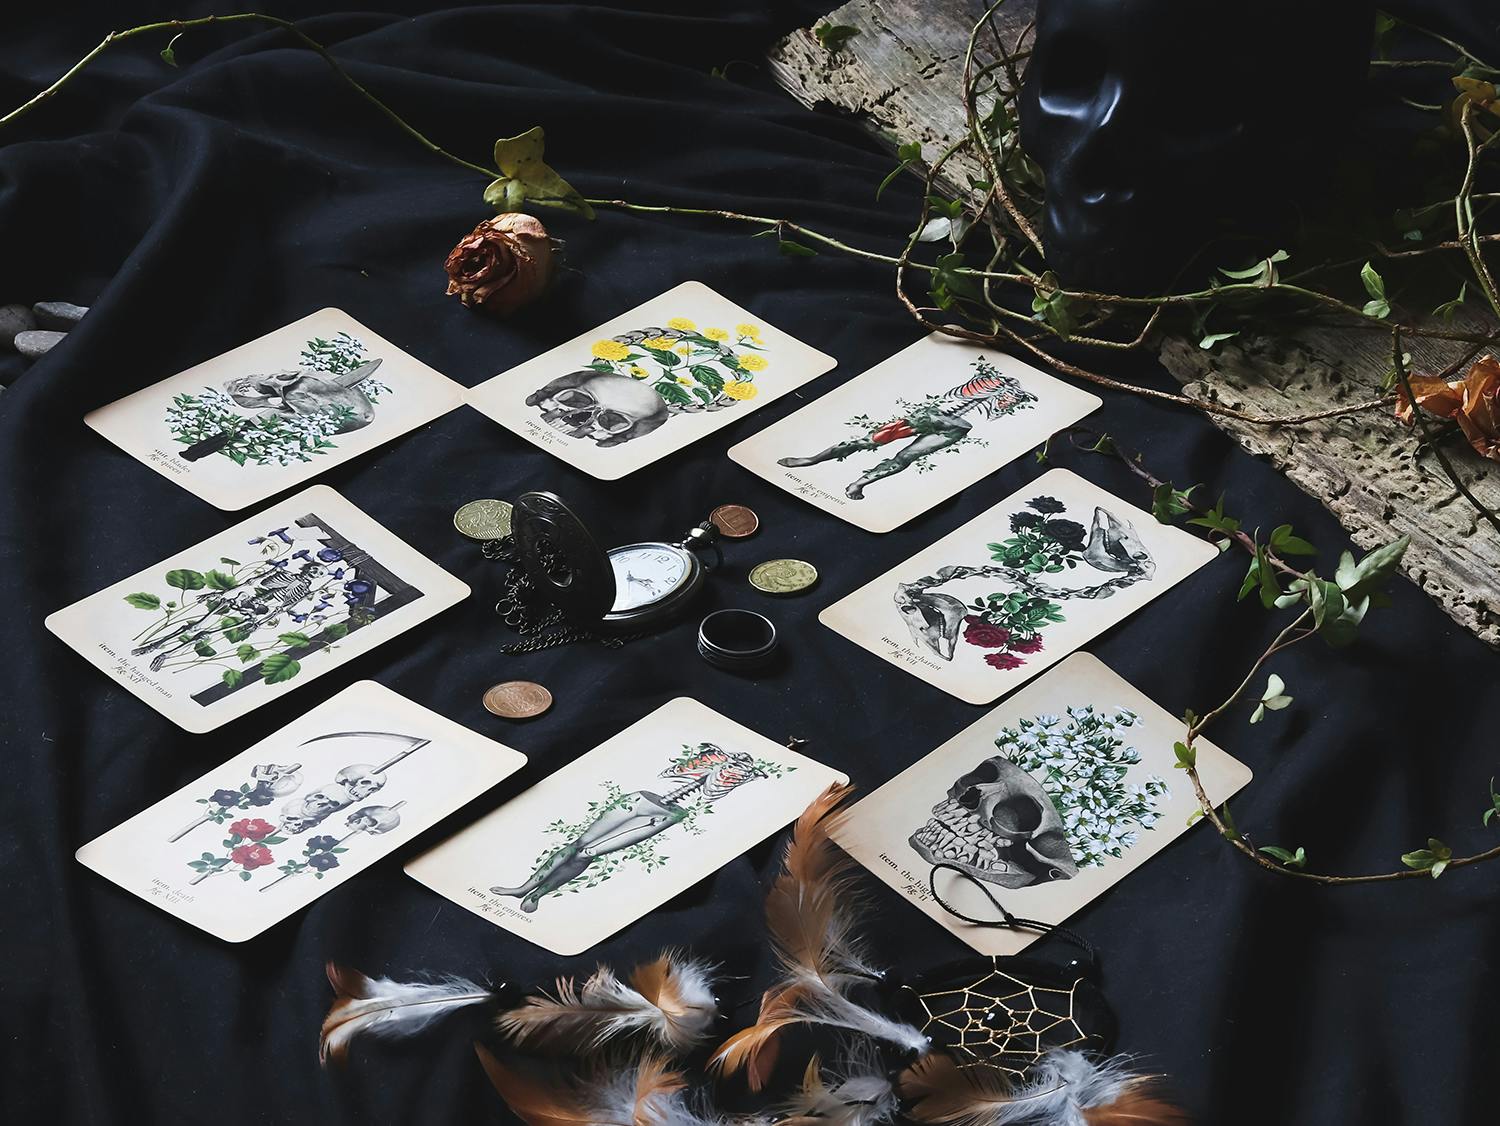 Tarot cards spread on black background with ceramic skull